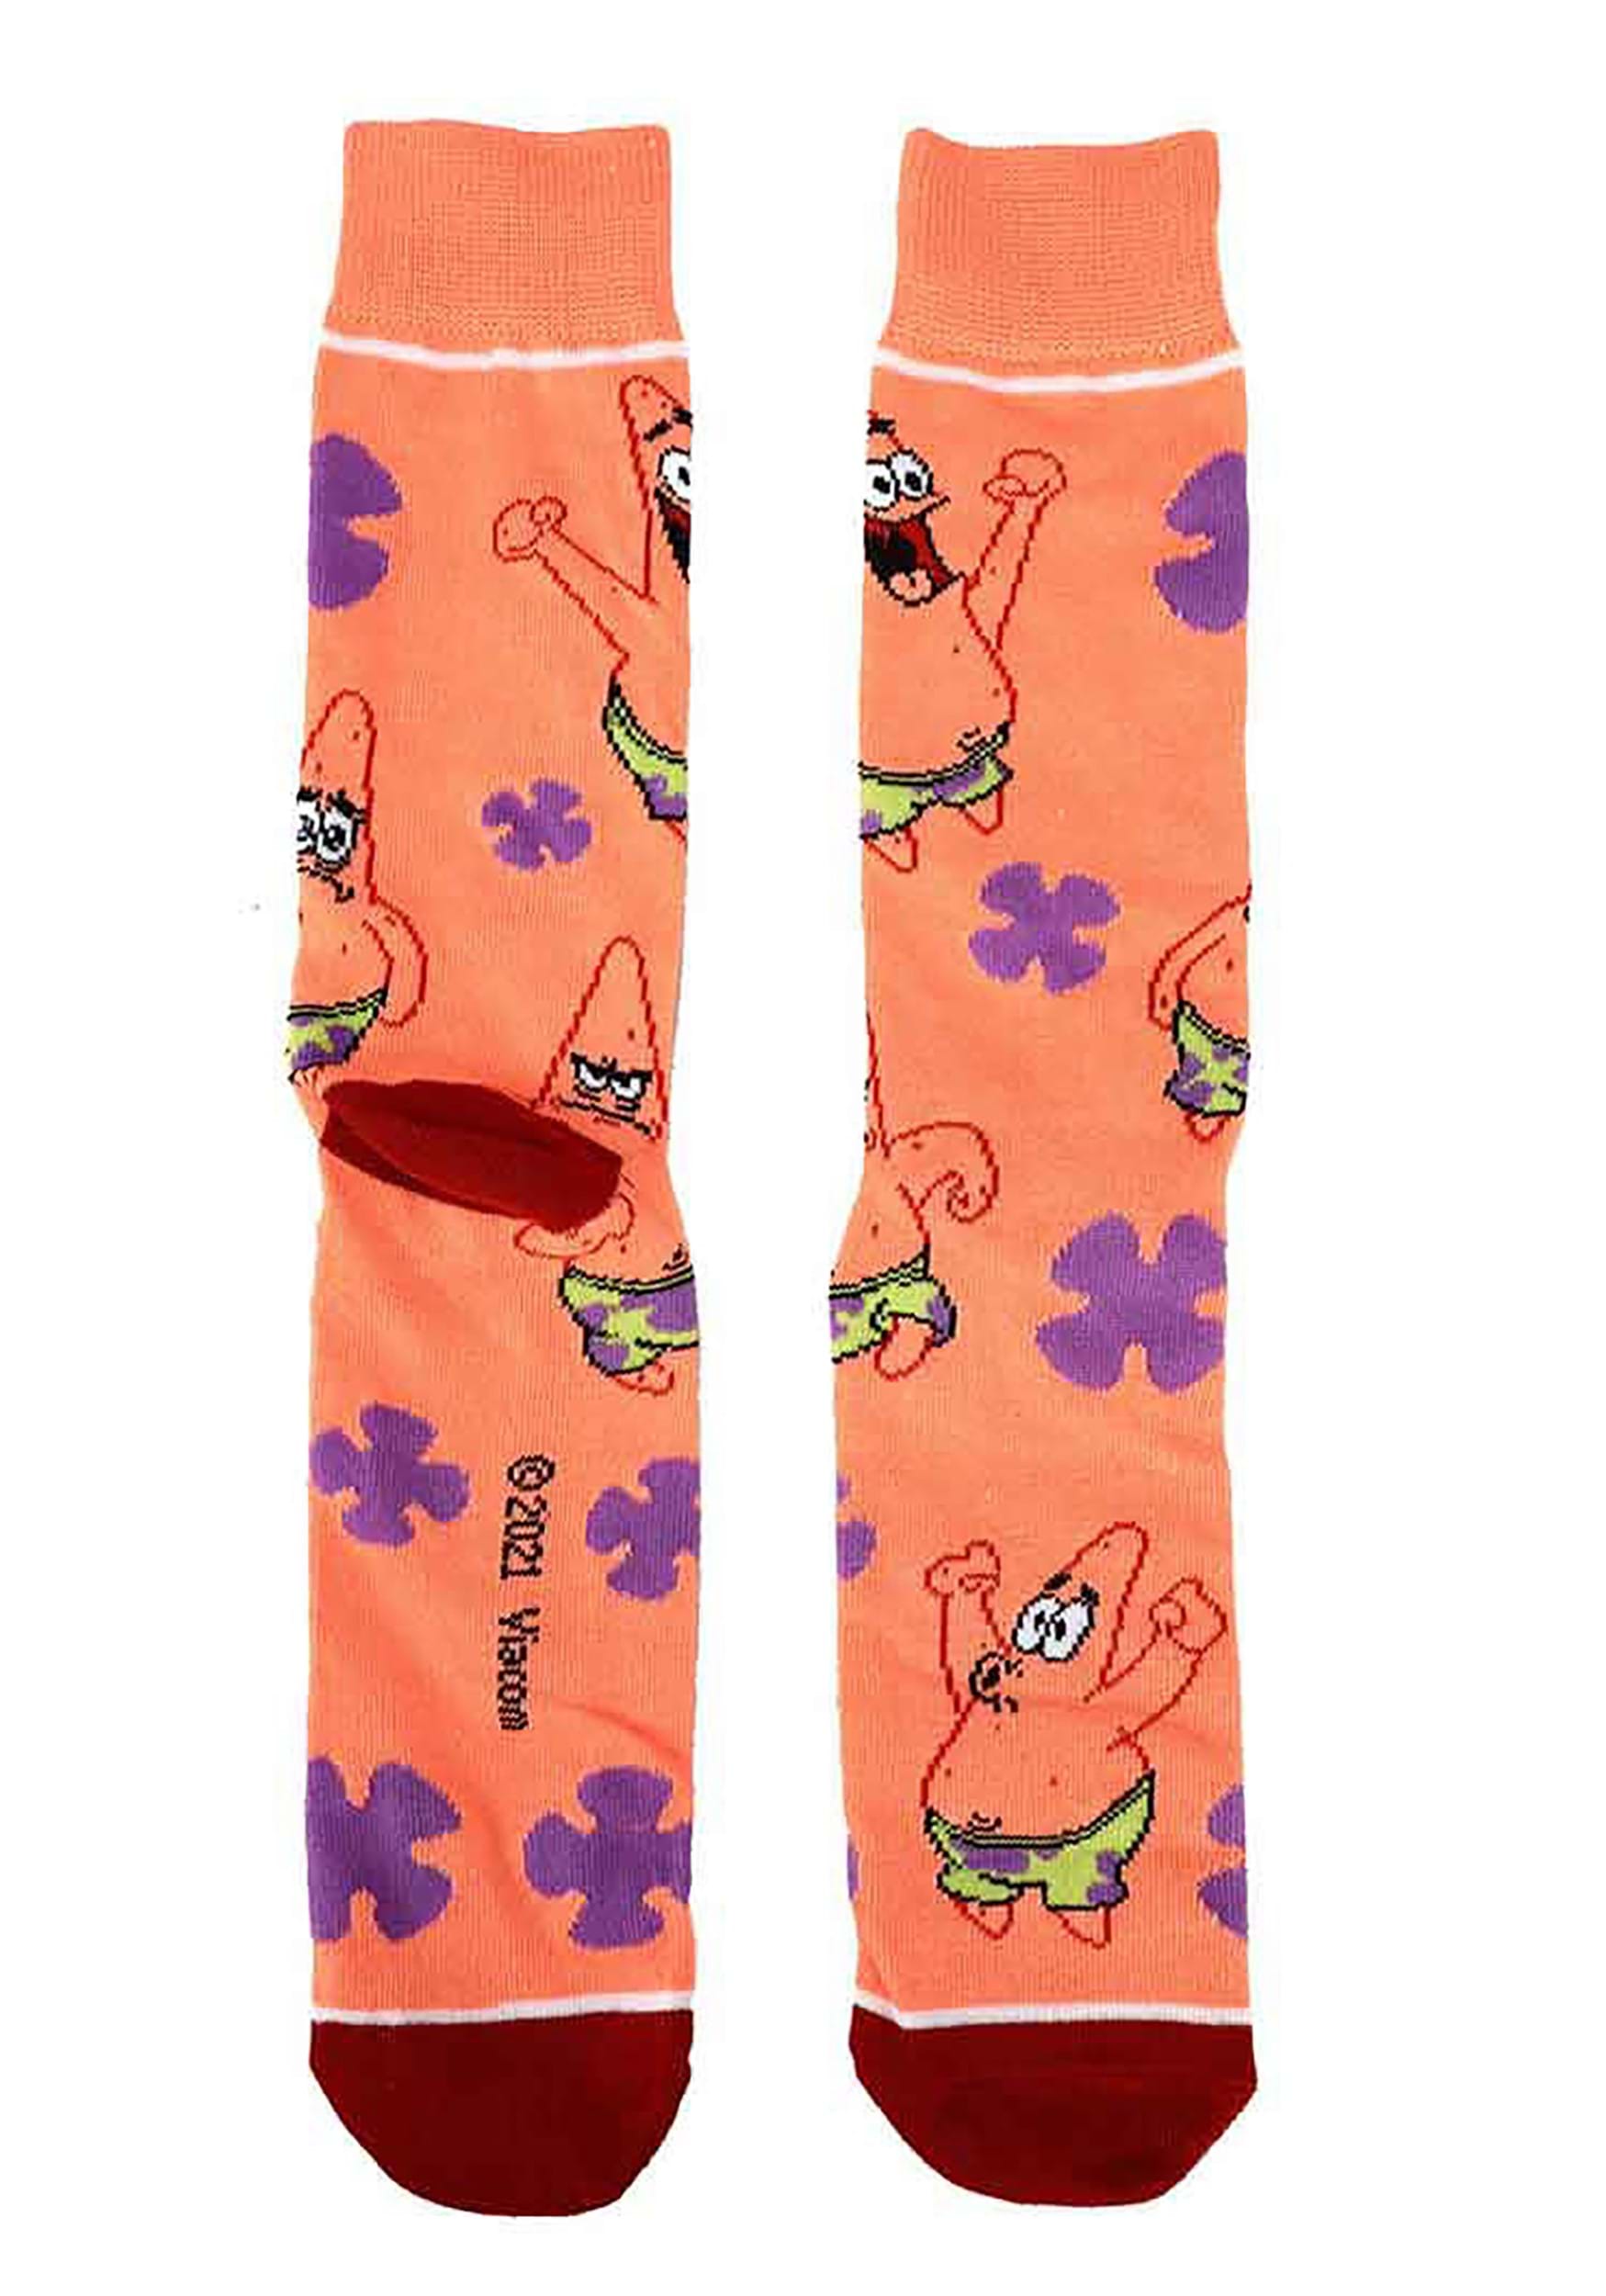 Multicolor Spongebob Mens Spongebob Crew Socks 5 Pairs, Accessories